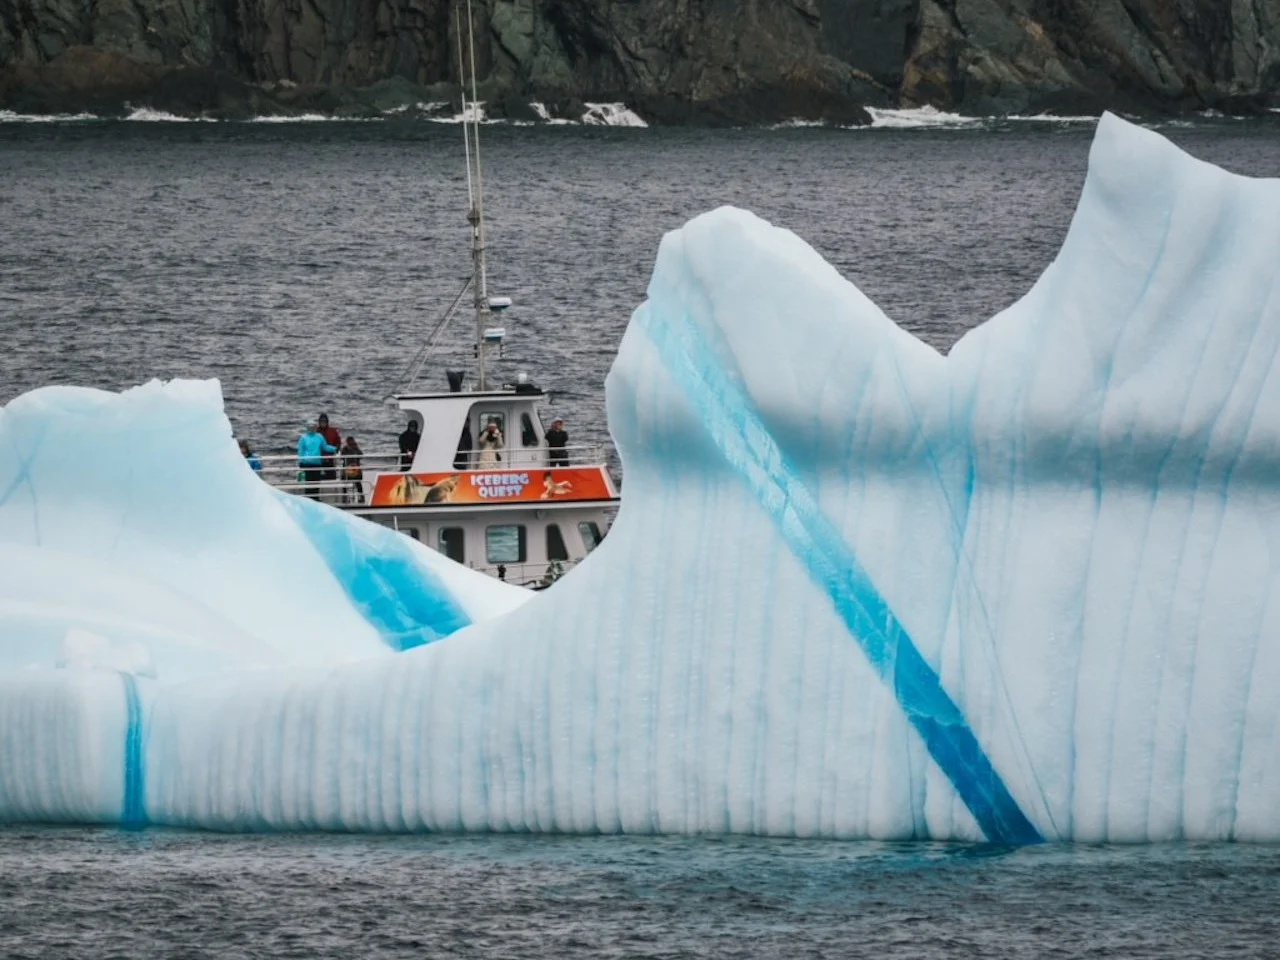 'Iceberg capital of the world' anticipating a strong, scenic season